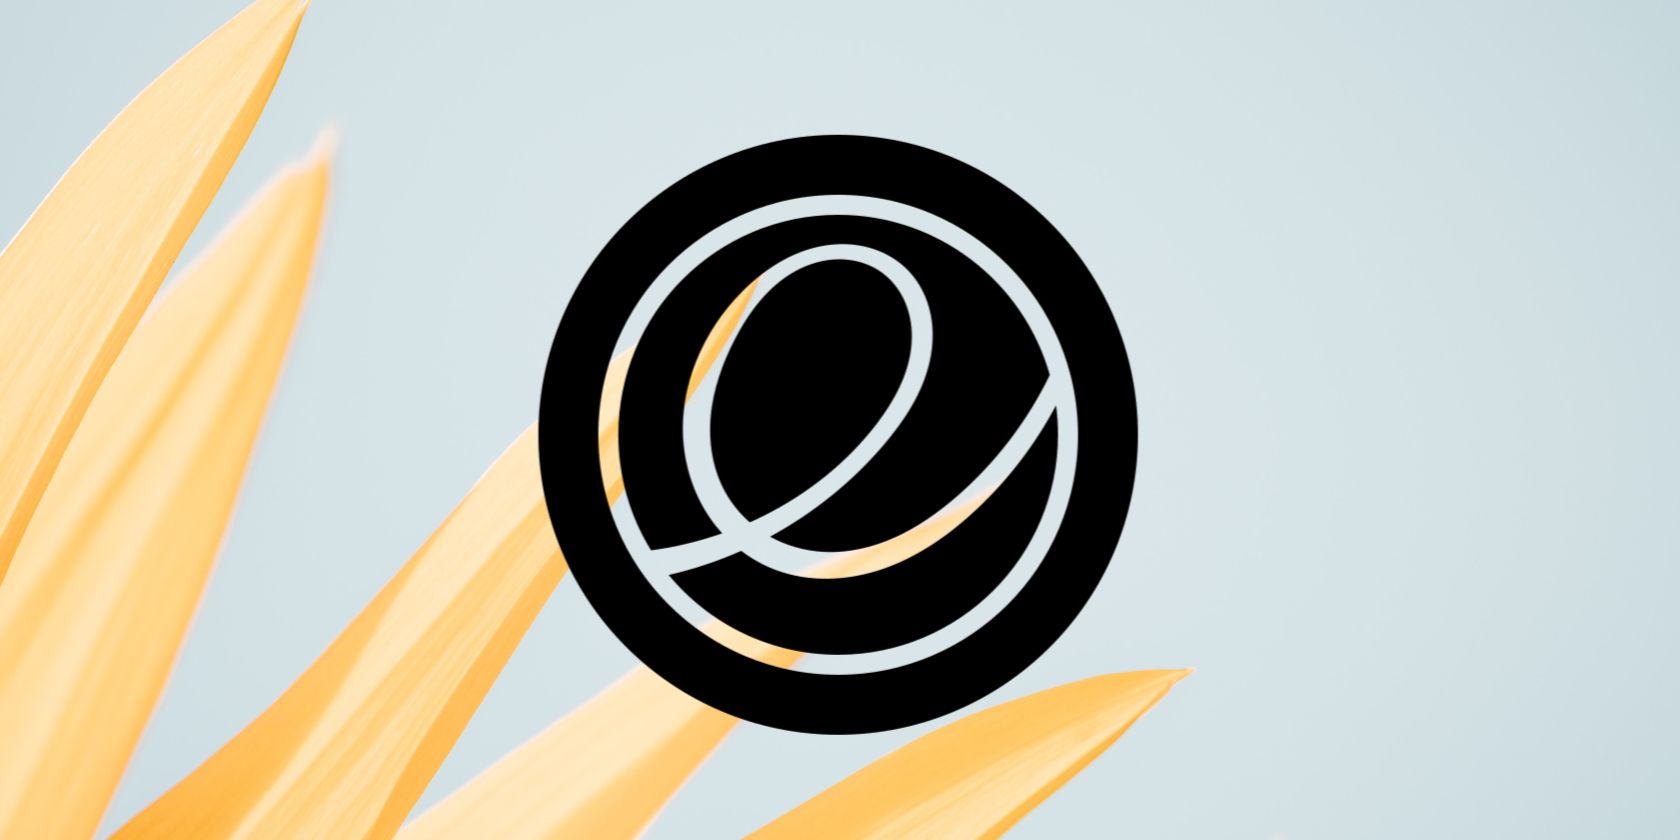 elementary os logo with flower background